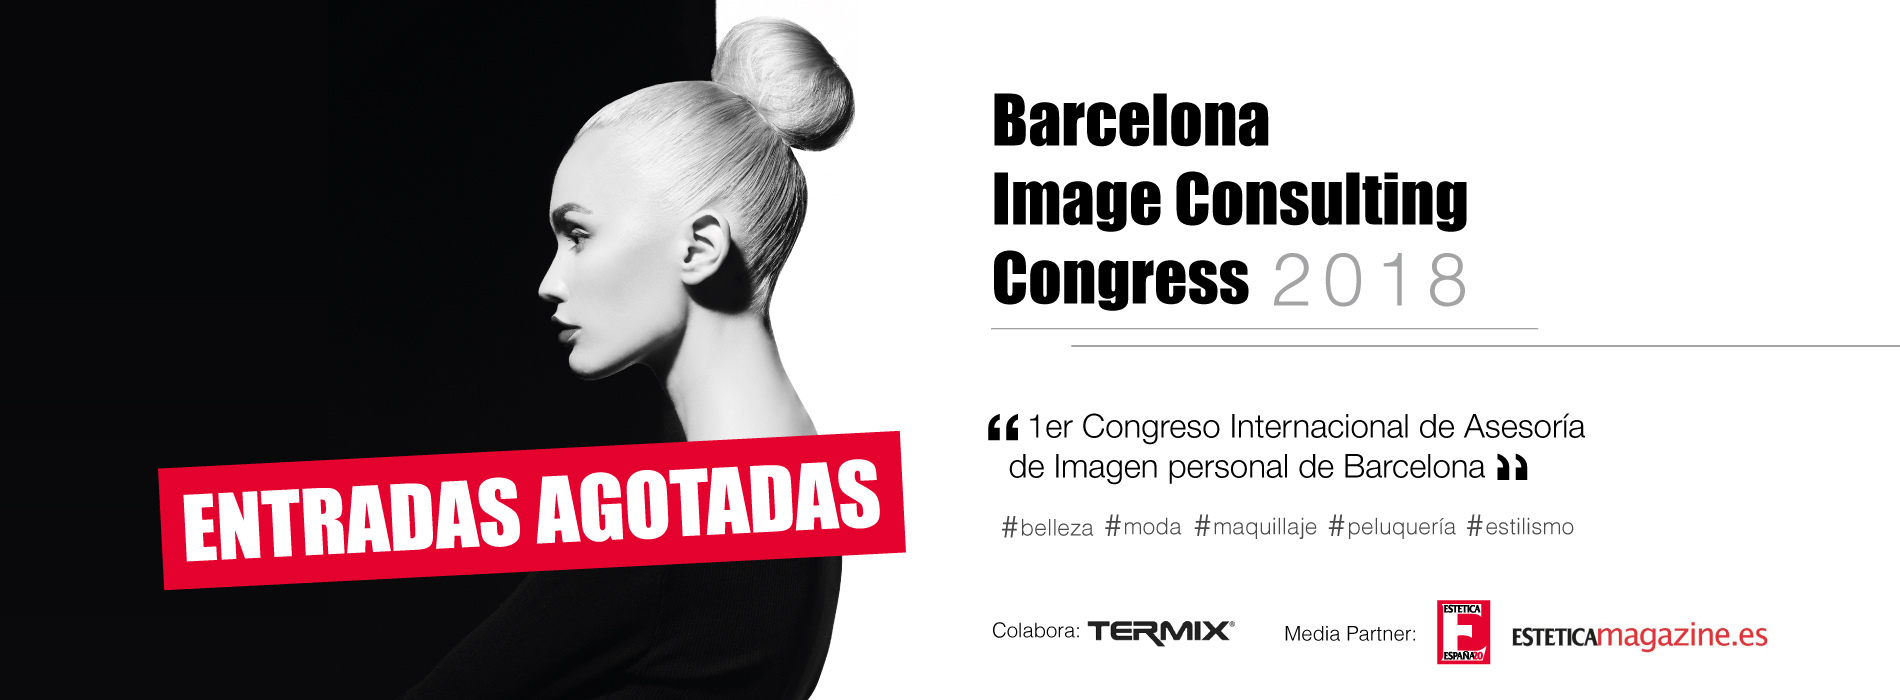 Cosmobeauty Barcelona - Barcelona Image Consulting Congress 2018